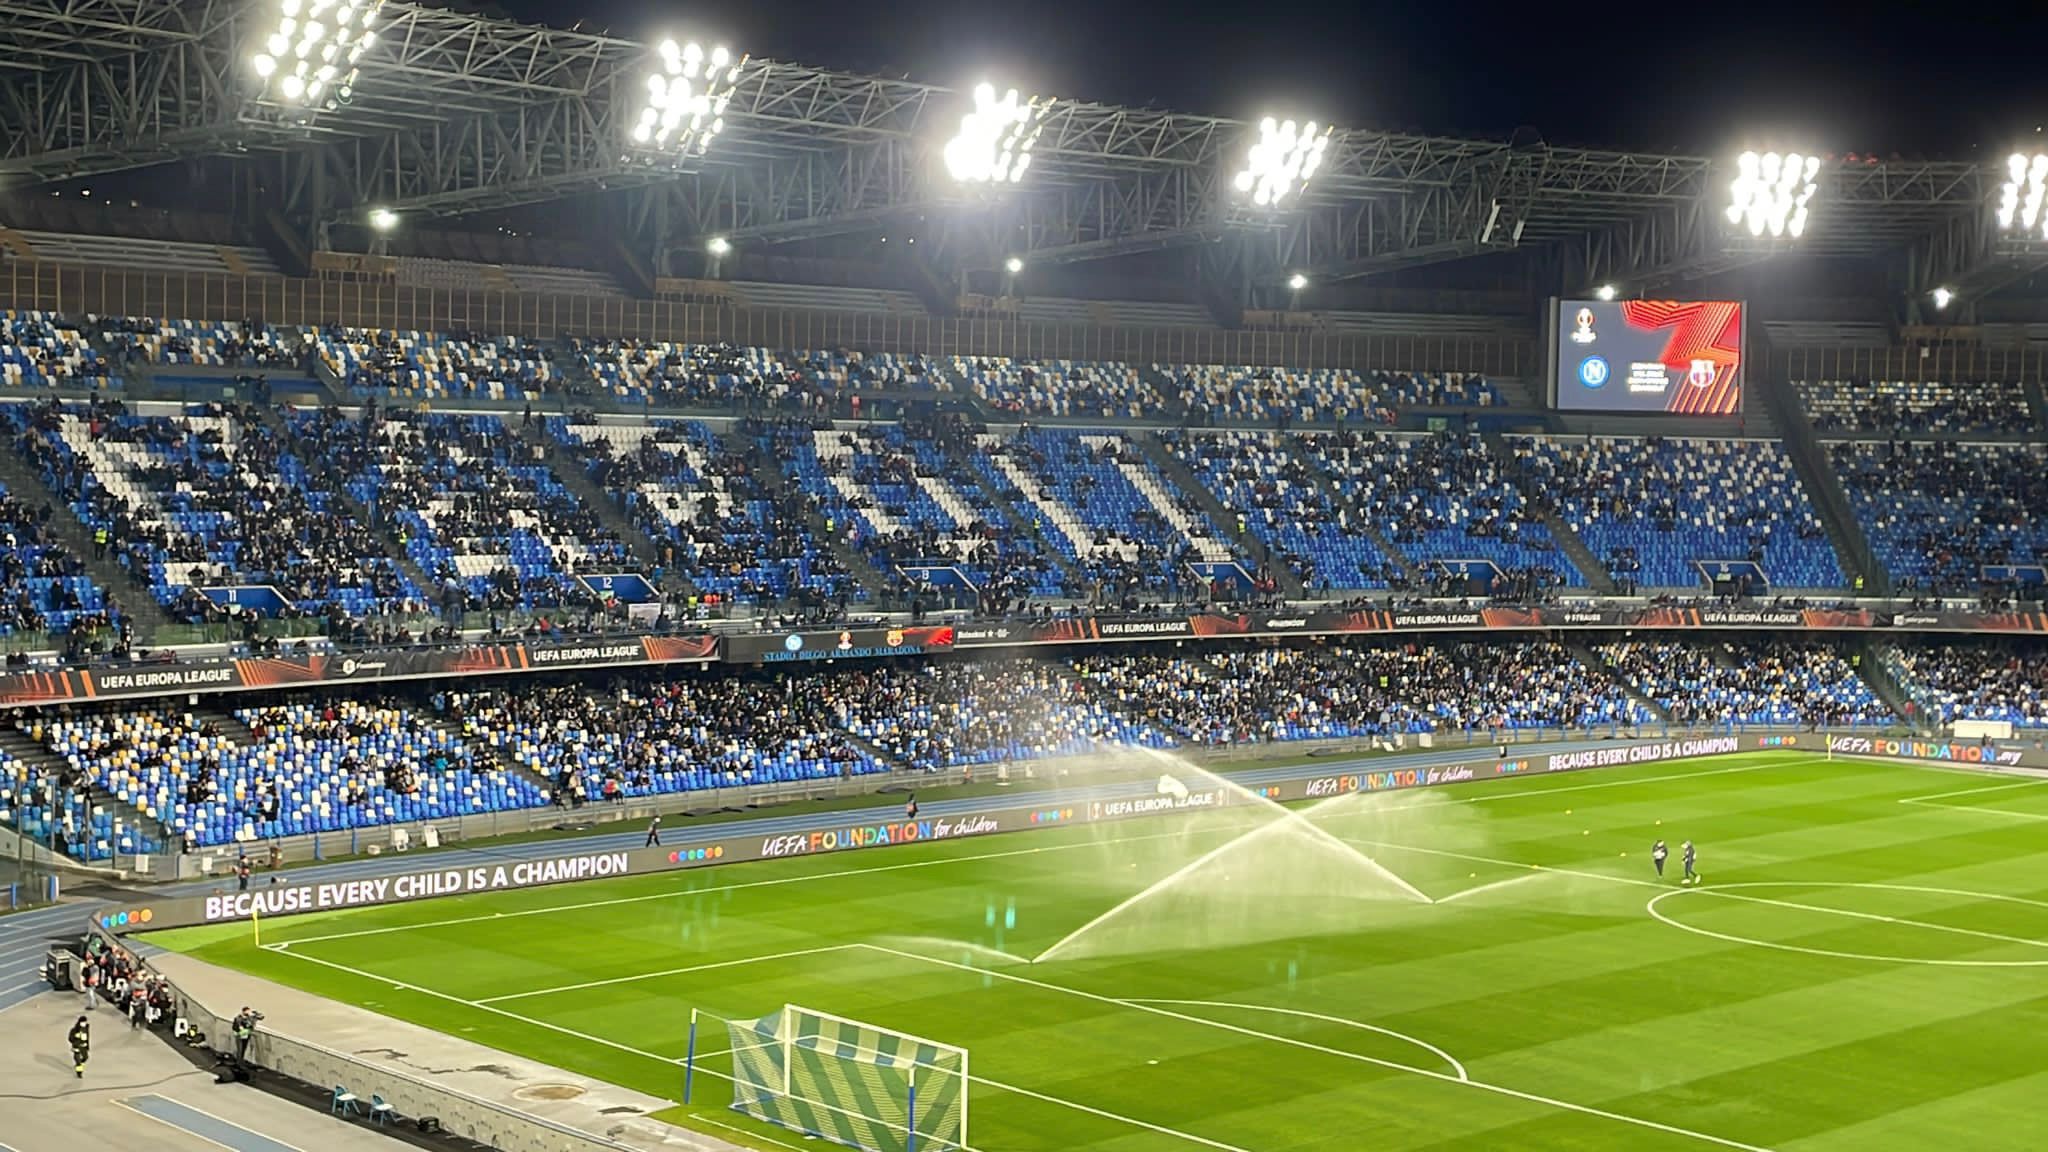 Napoli Stadio Maradona